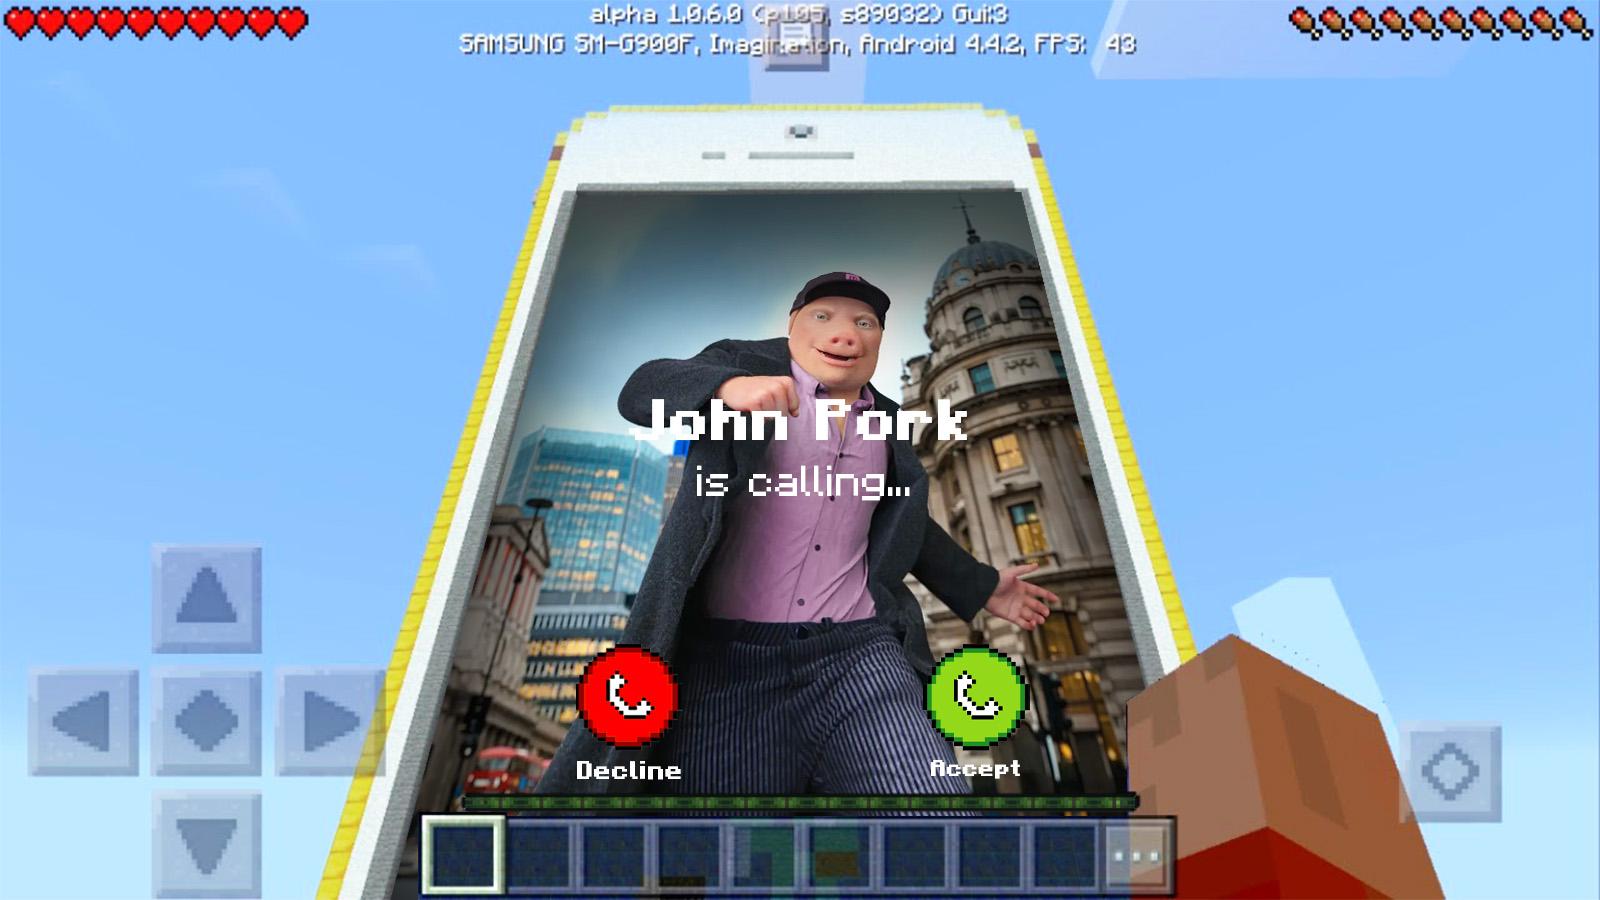 Download and play John Pork on PC & Mac (Emulator)